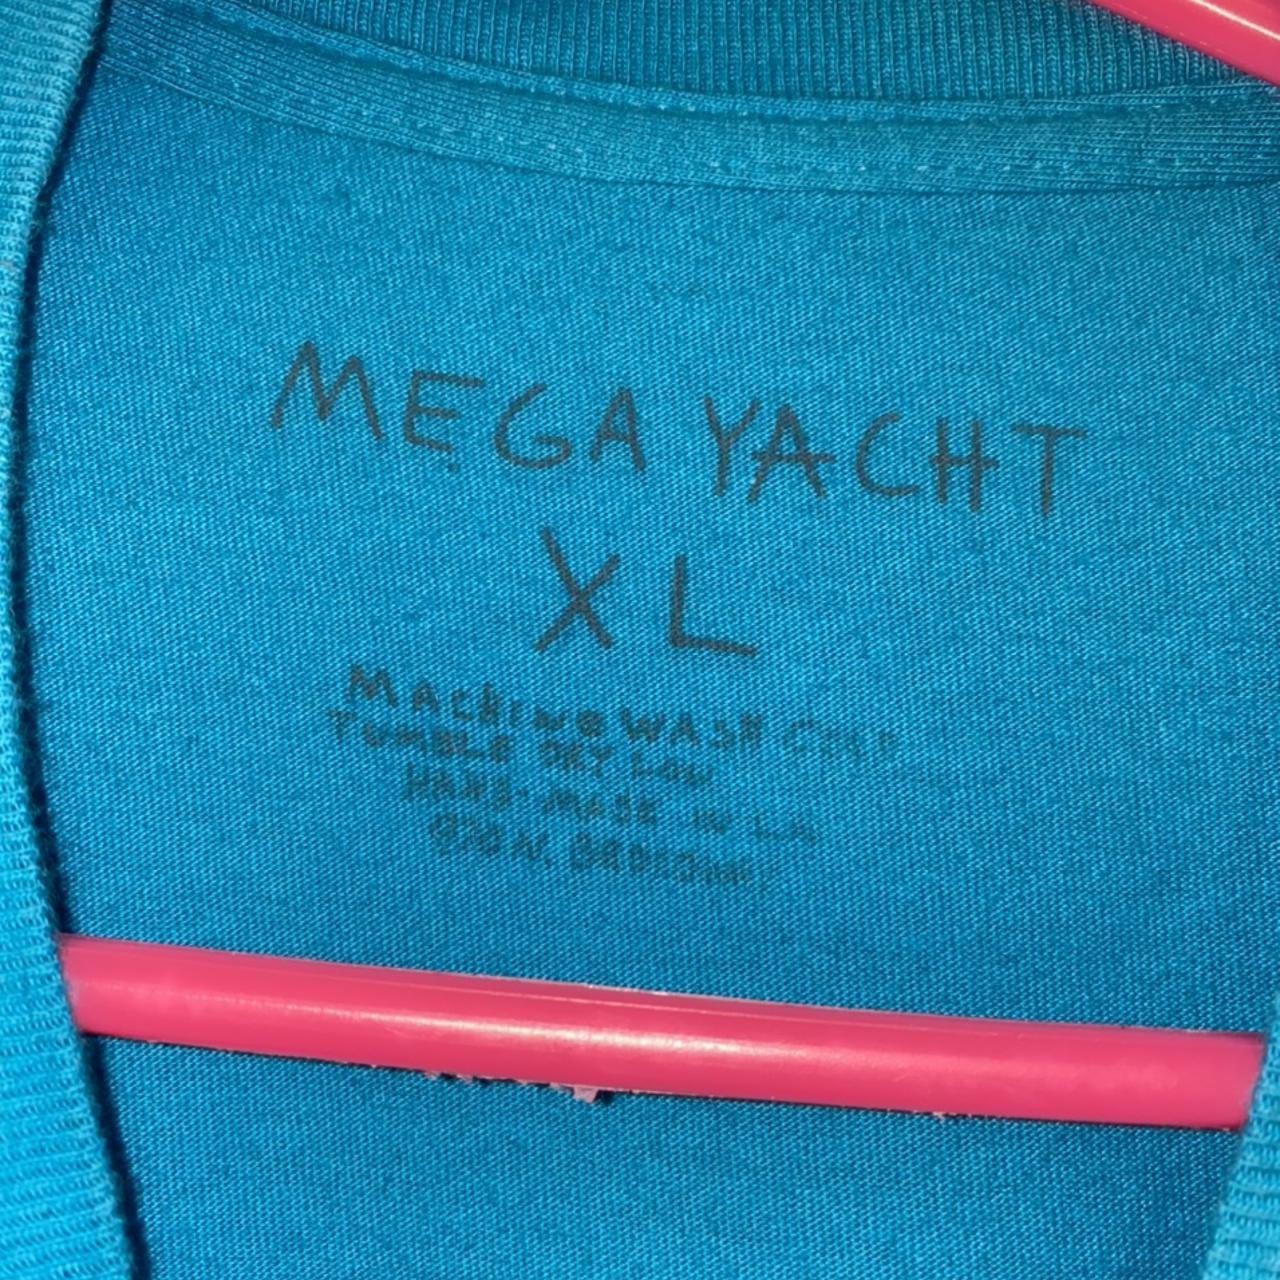 Mega Yacht Casper tee size XXL (og photo used, shirt - Depop